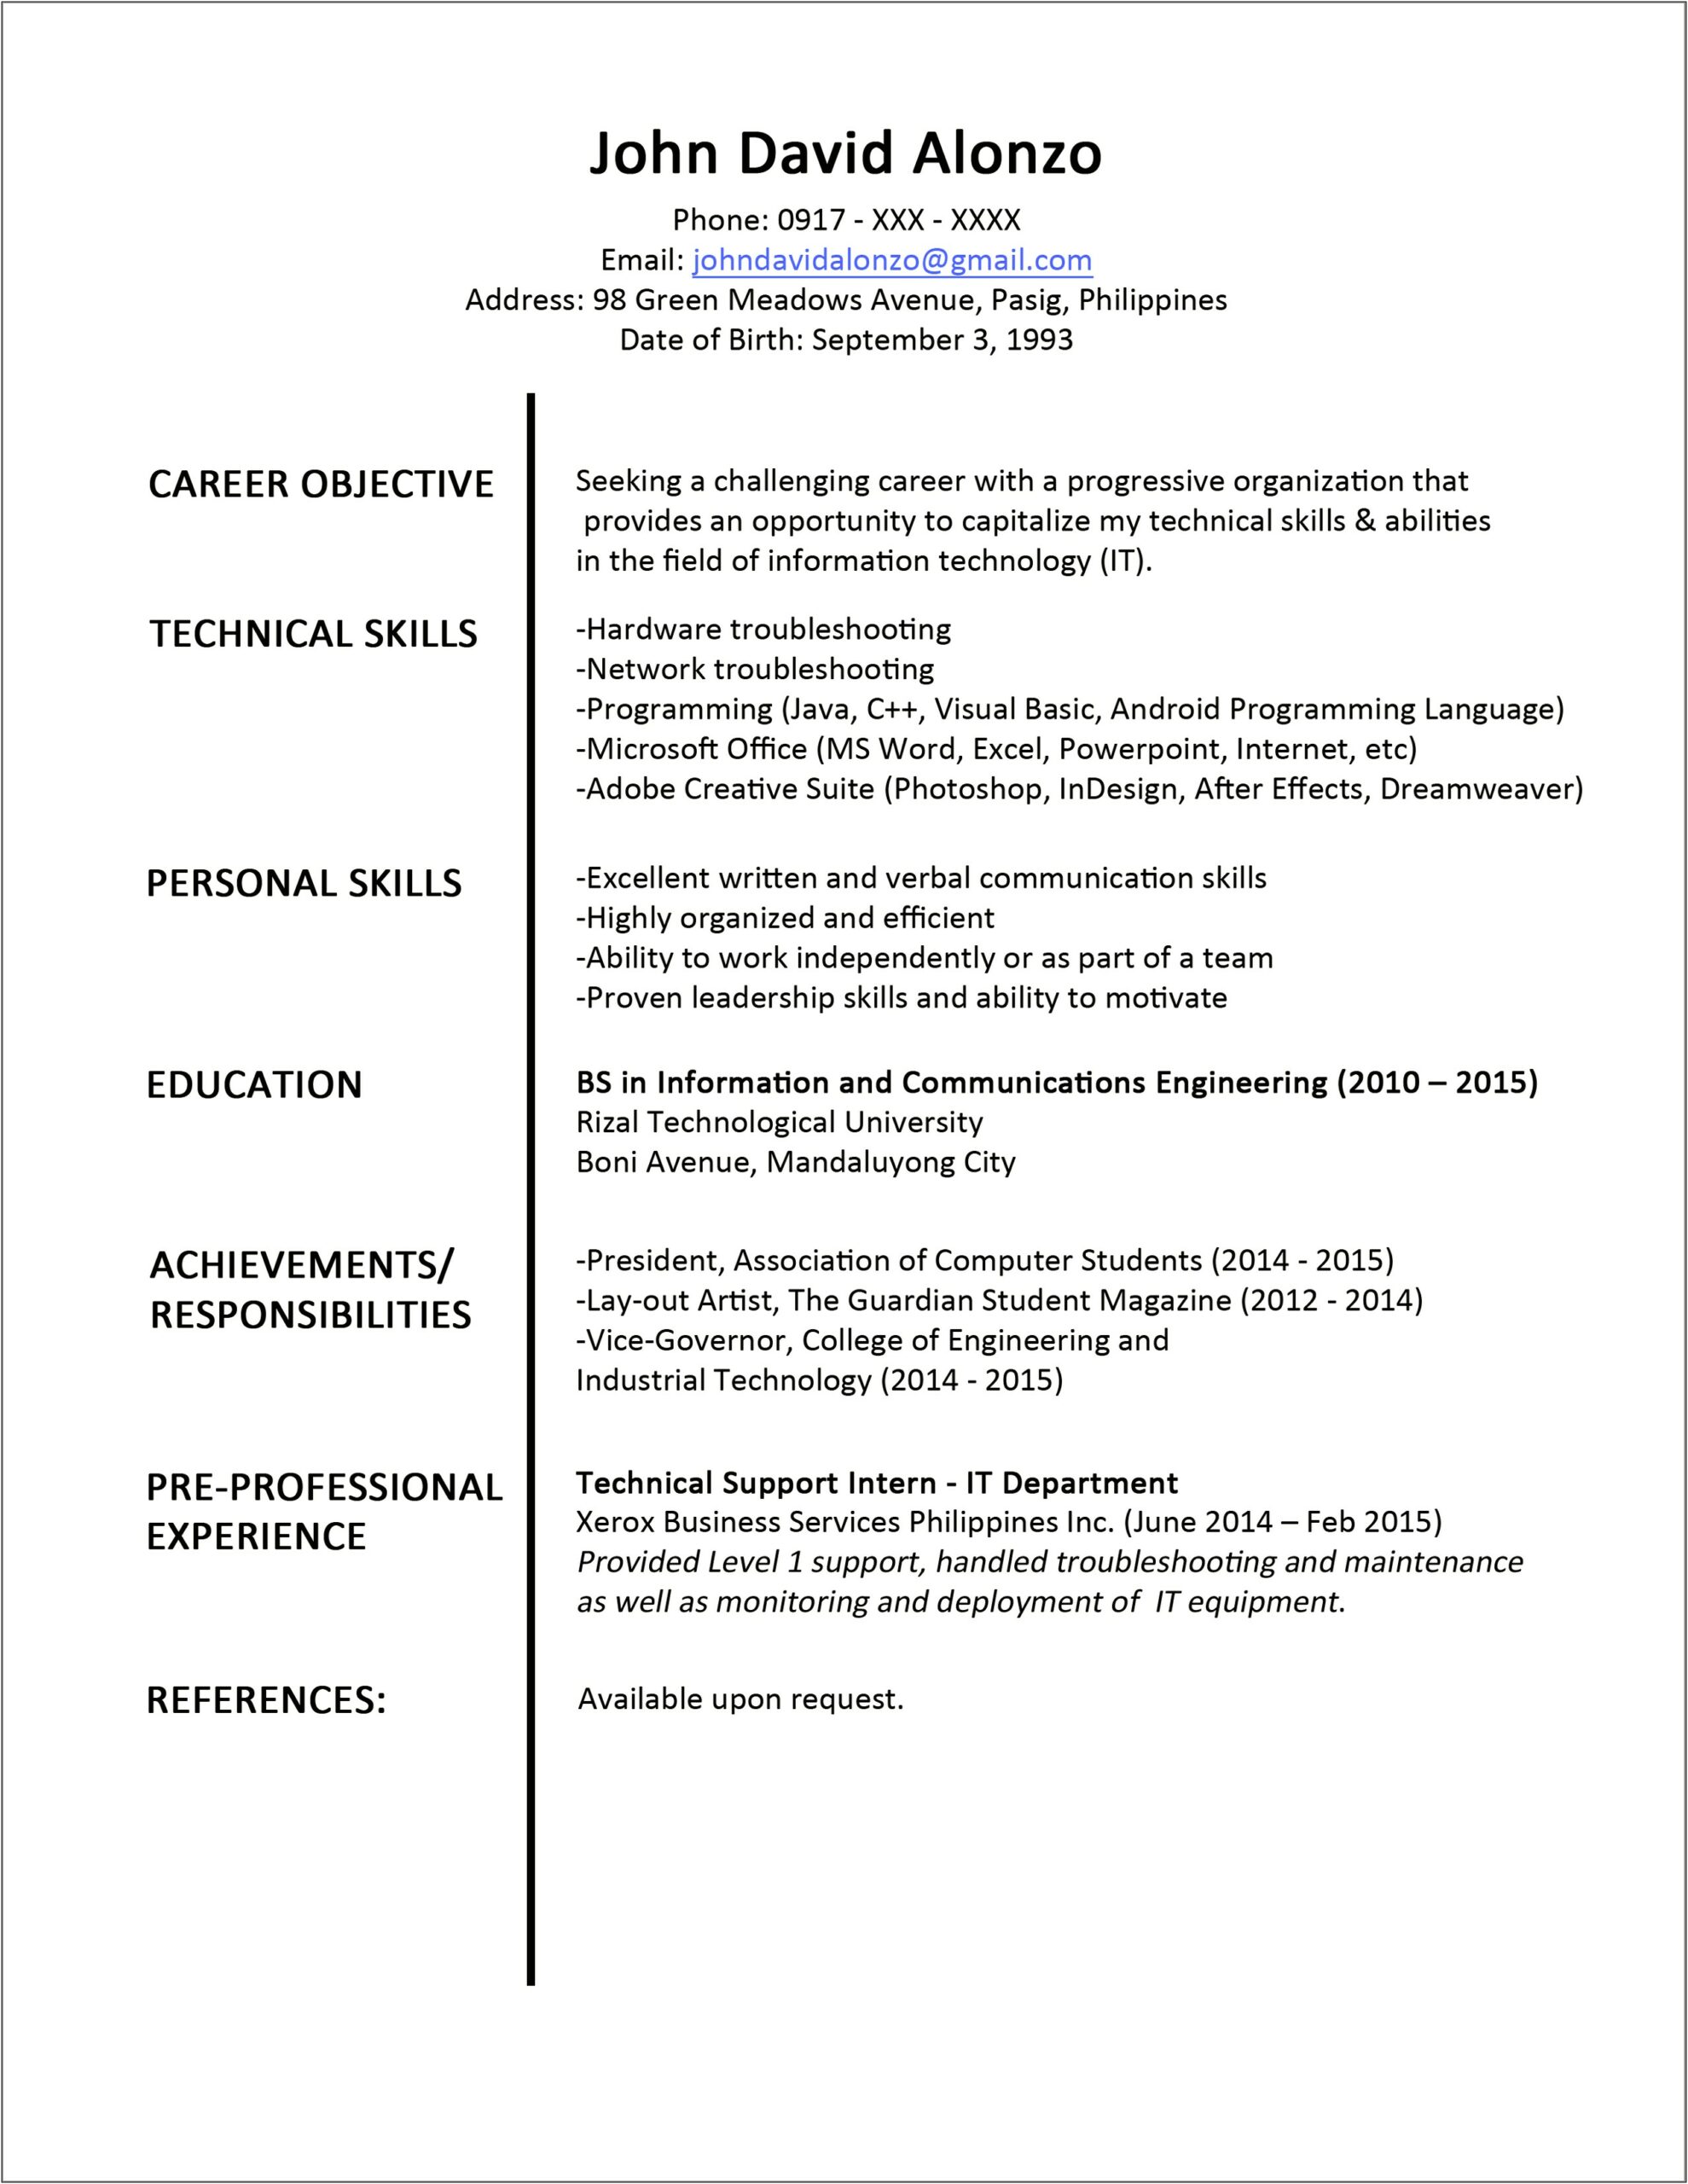 Job Application Job Responsibilities Copy Paste Resume